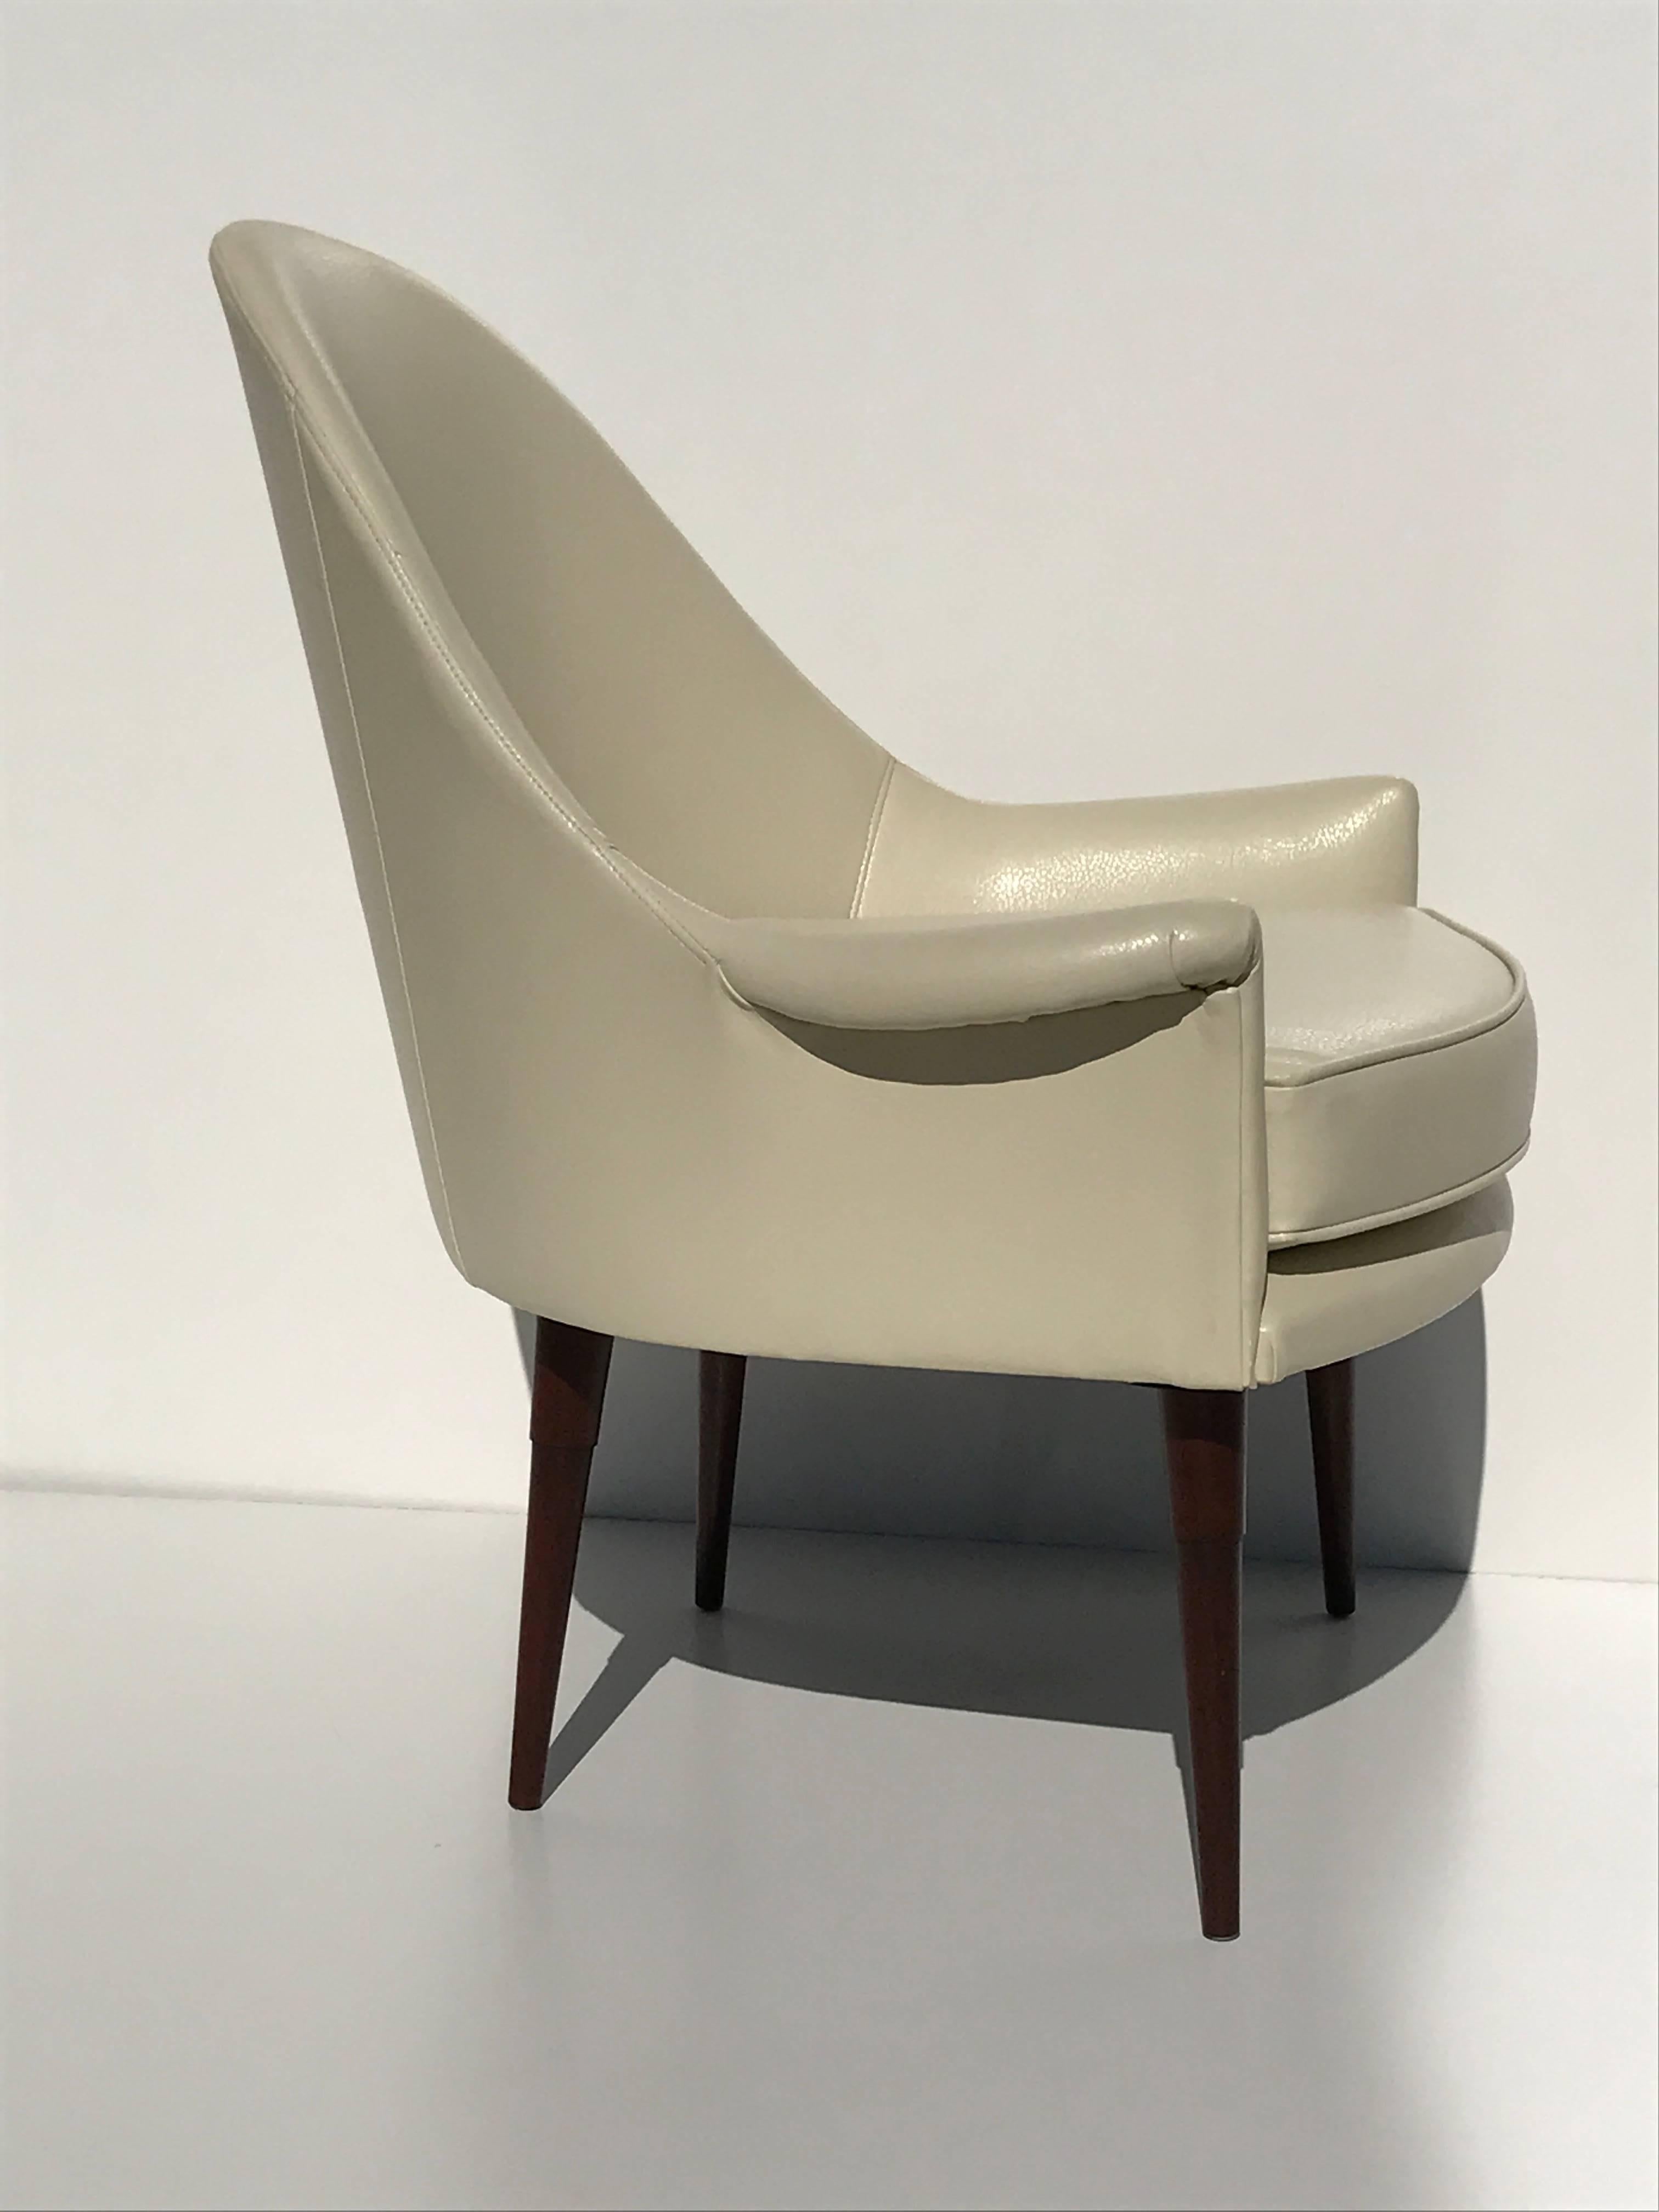 Petite Mid-Century scoop back lounge chair in cream naugahyde.